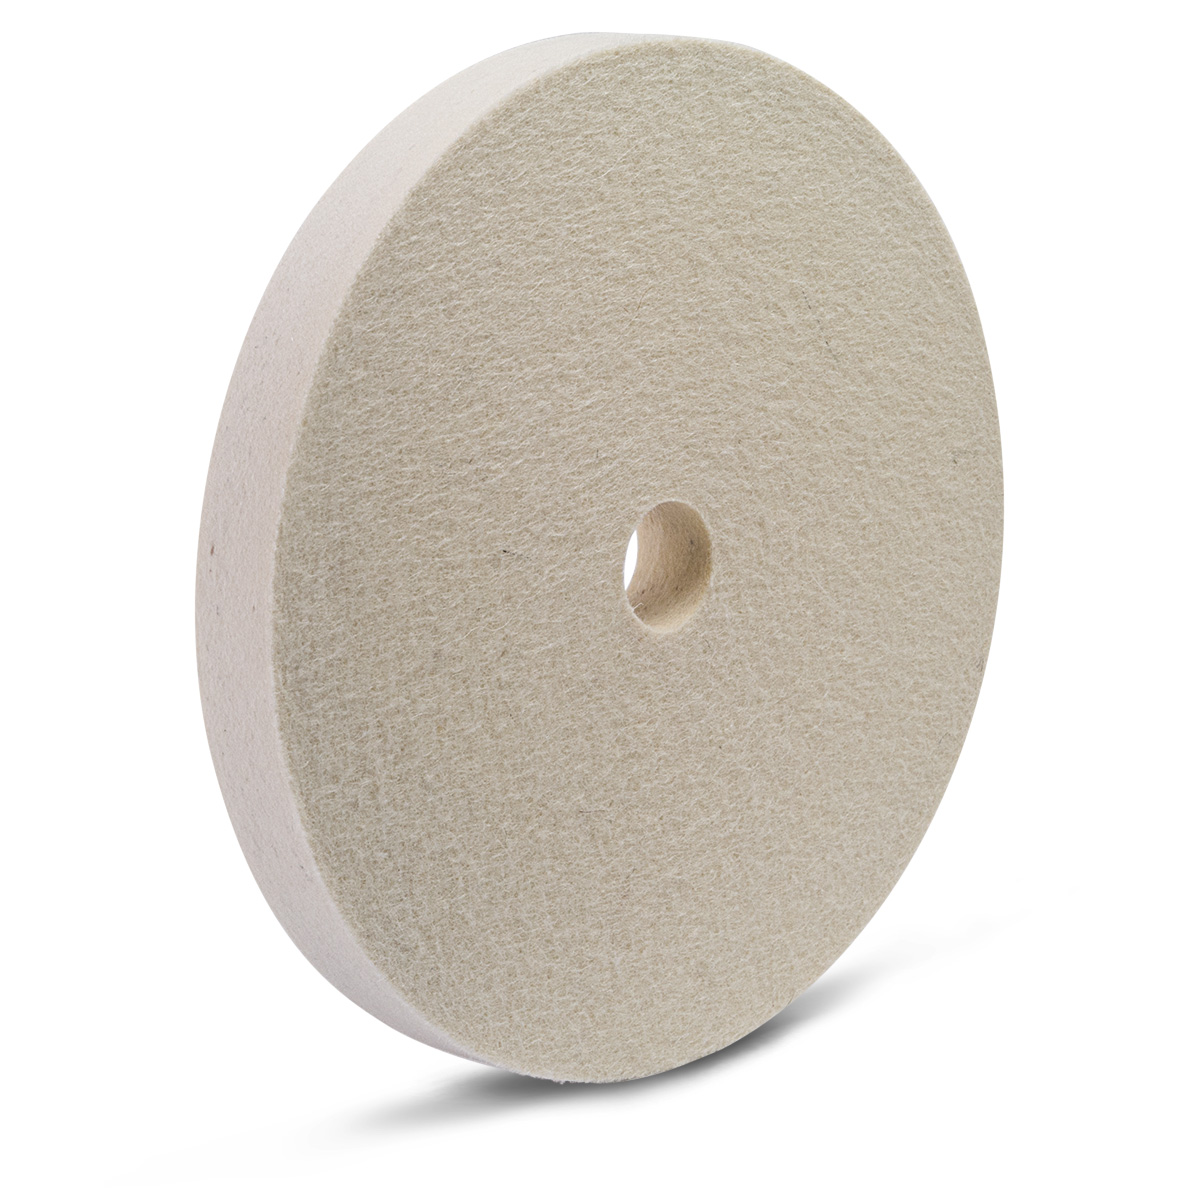 Felt disc, wool felt, white, Ø 200 x 20 mm, hole Ø 25 mm, medium